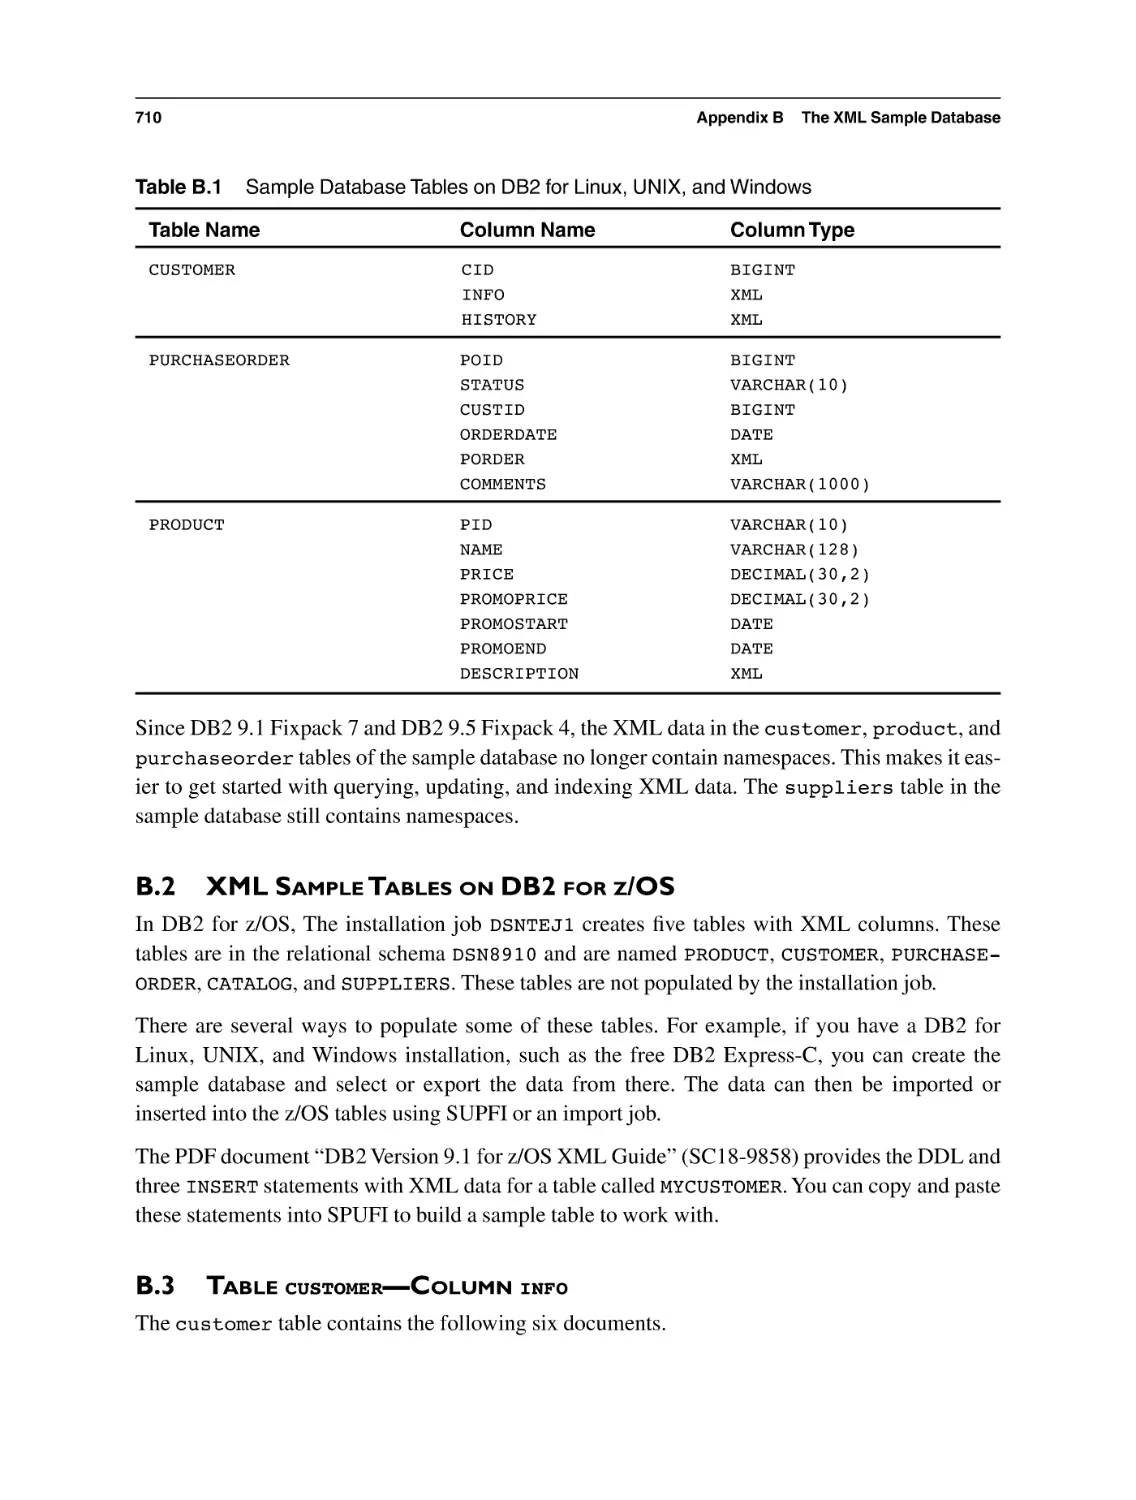 B.2 XML Sample Tables on DB2 for z/OS
B.3 Table customer—Column info